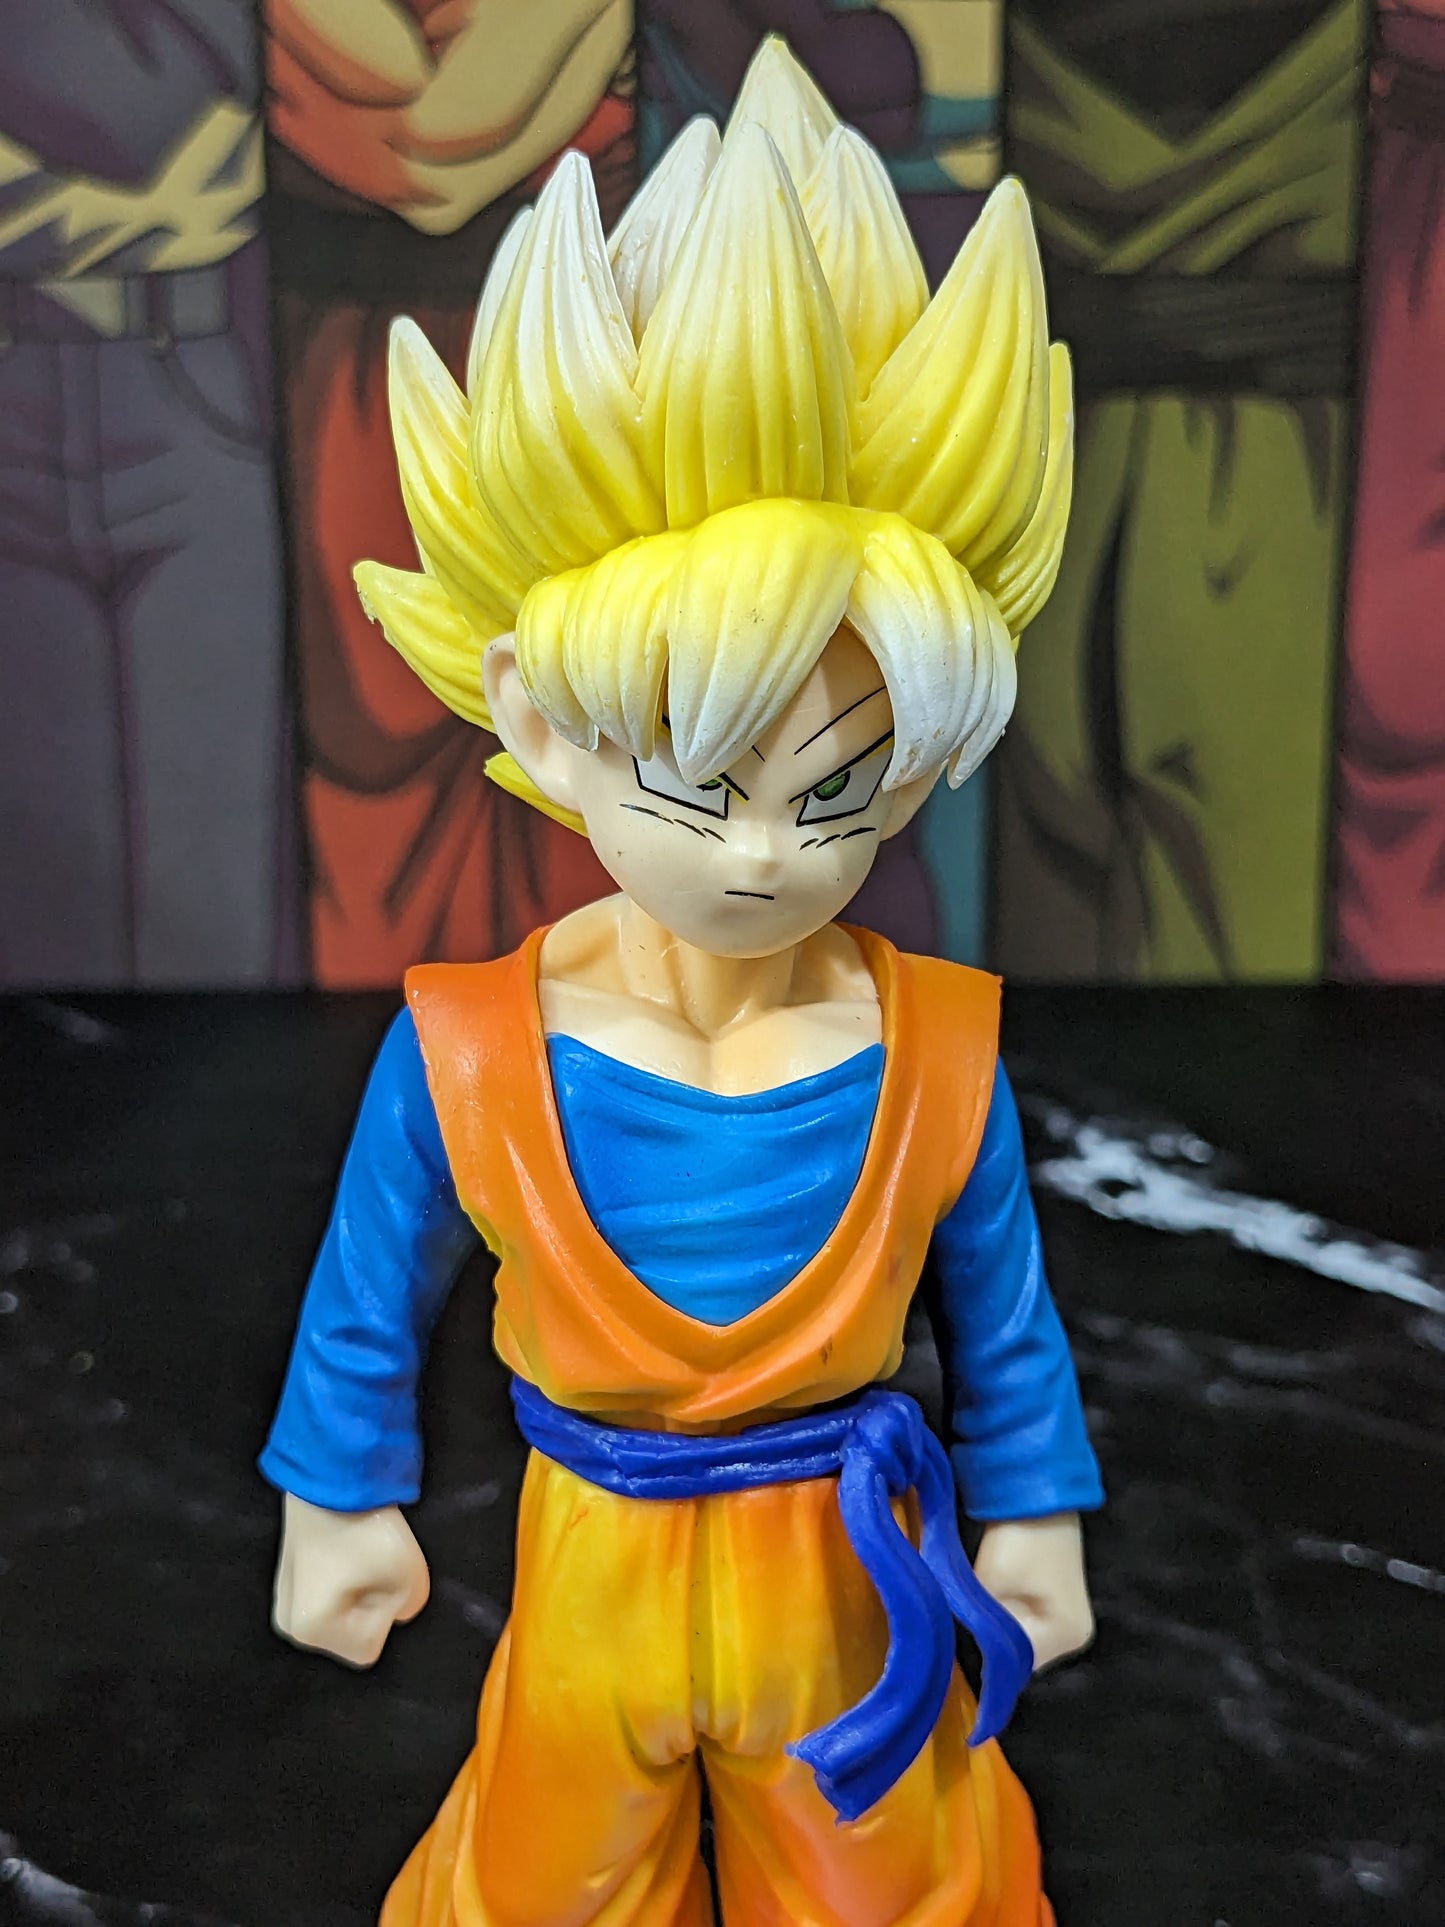 Dragon BallZ Anime, 18 cm Super Saiyan Son Goten (Yellow Hair), Childhood Statue, PVC Action Figure, Best Toy Gift & Collectibles